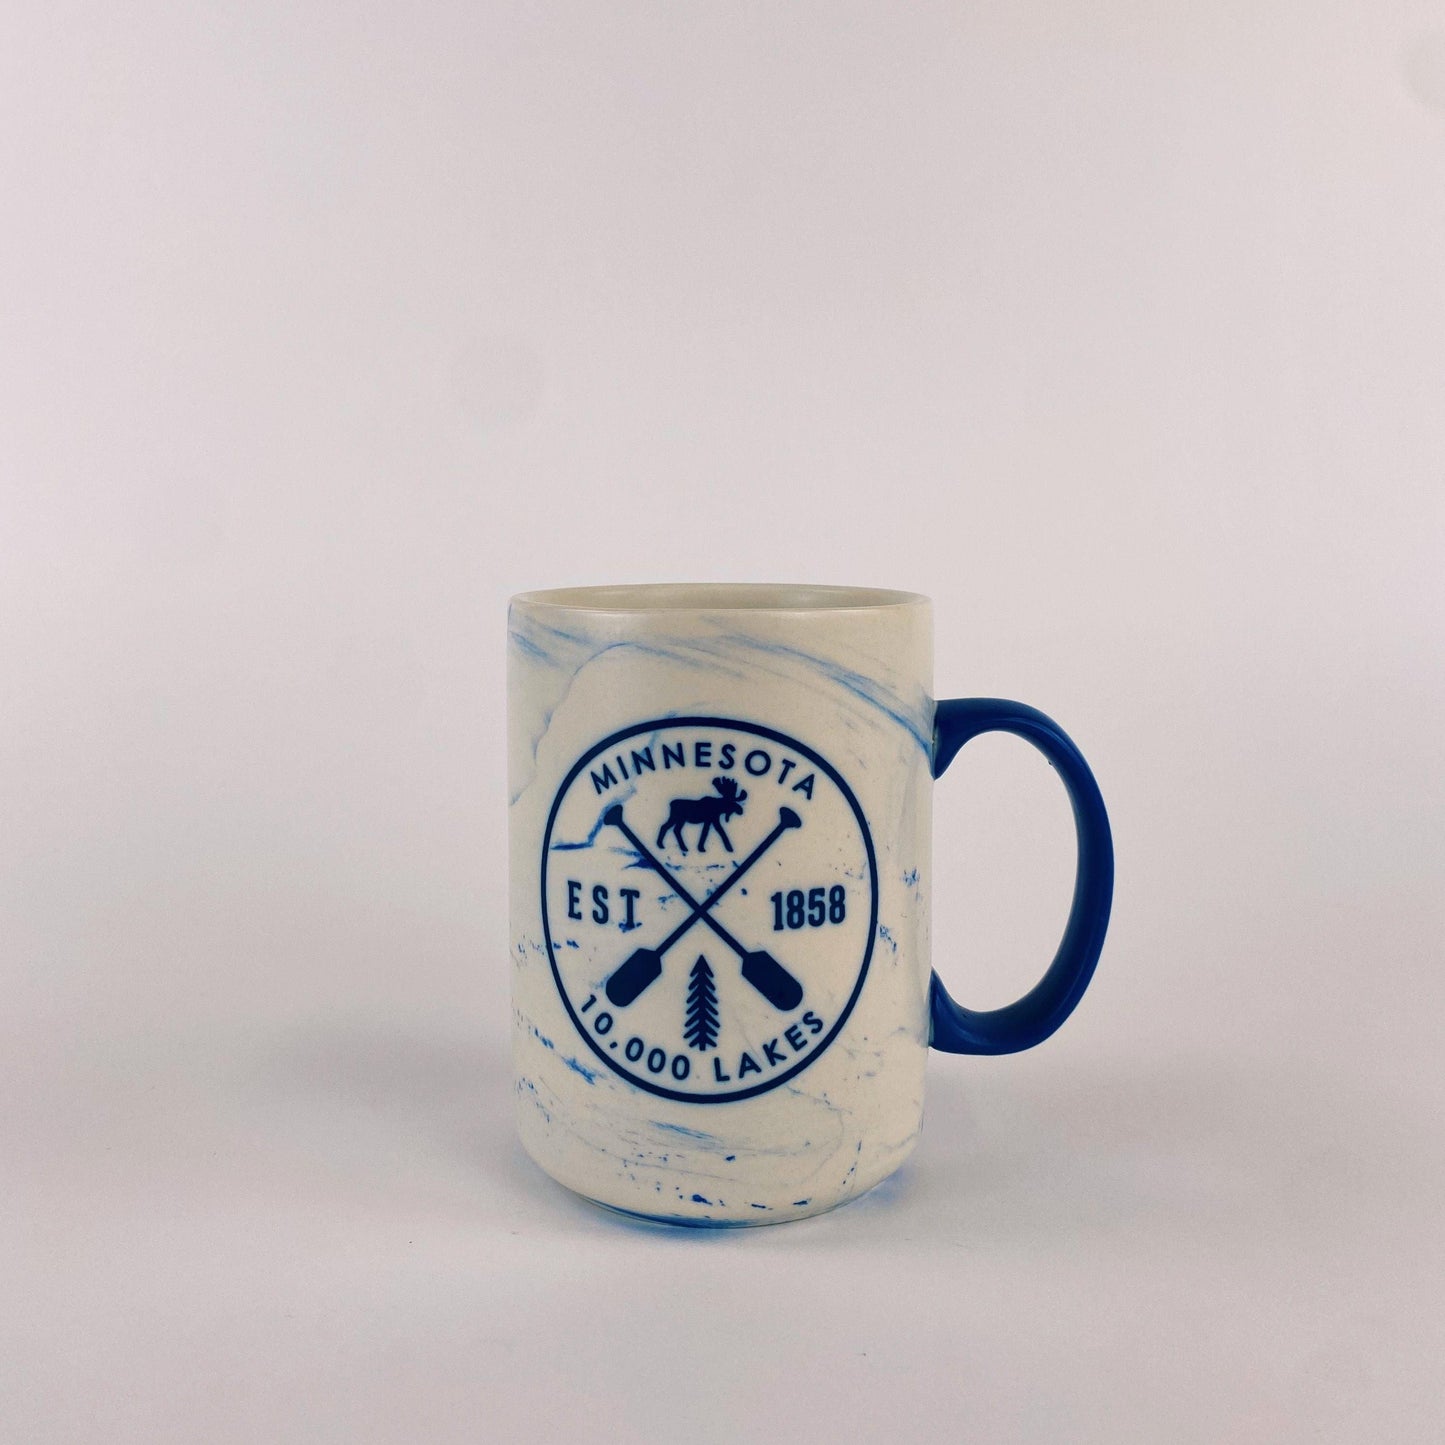 Minnesota Established Crest Blue Mug - Love From USA